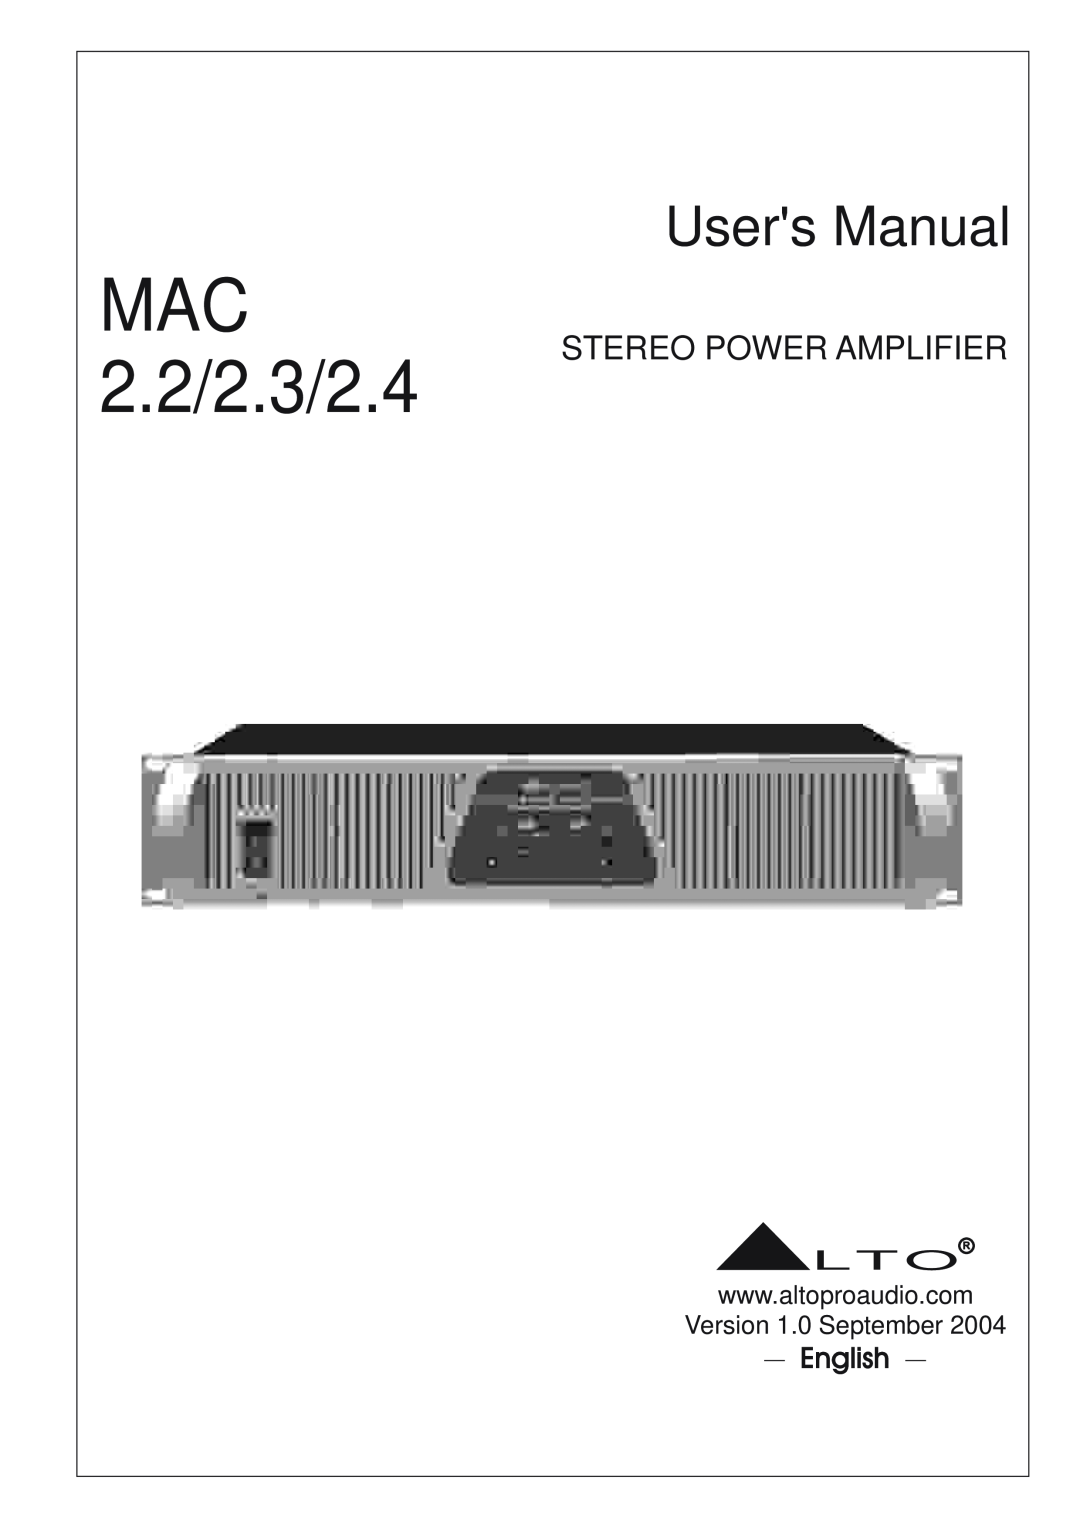 Nilfisk-ALTO MAC 2.2, MAC 2.3, MAC 2.4 user manual MAC 2.2/2.3/2.4, Stereo Power Amplifier, English 